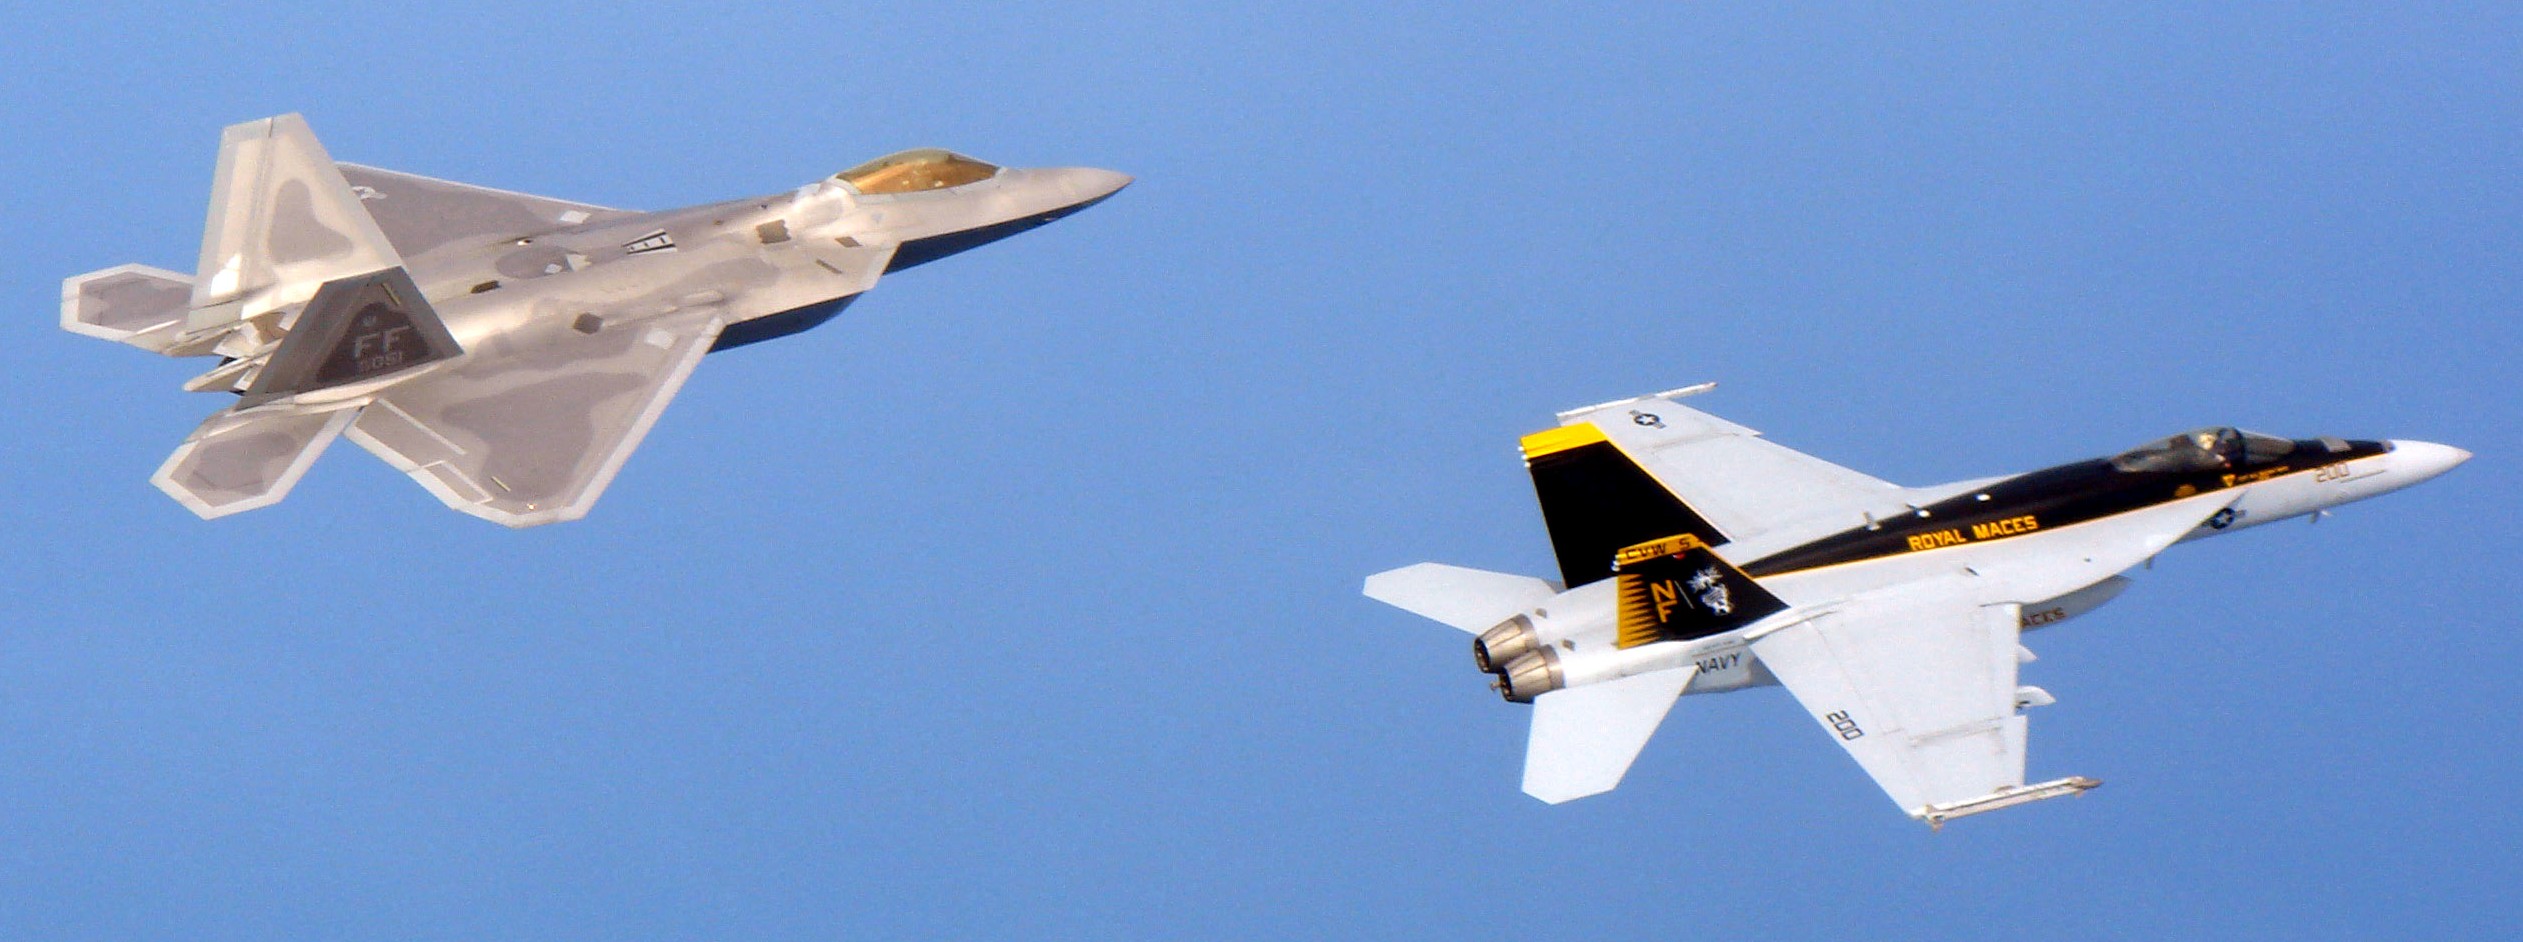 vfa-27 royal maces strike fighter squadron f/a-18e super hornet cv-63 uss kitty hawk cvw-5 us navy 172p